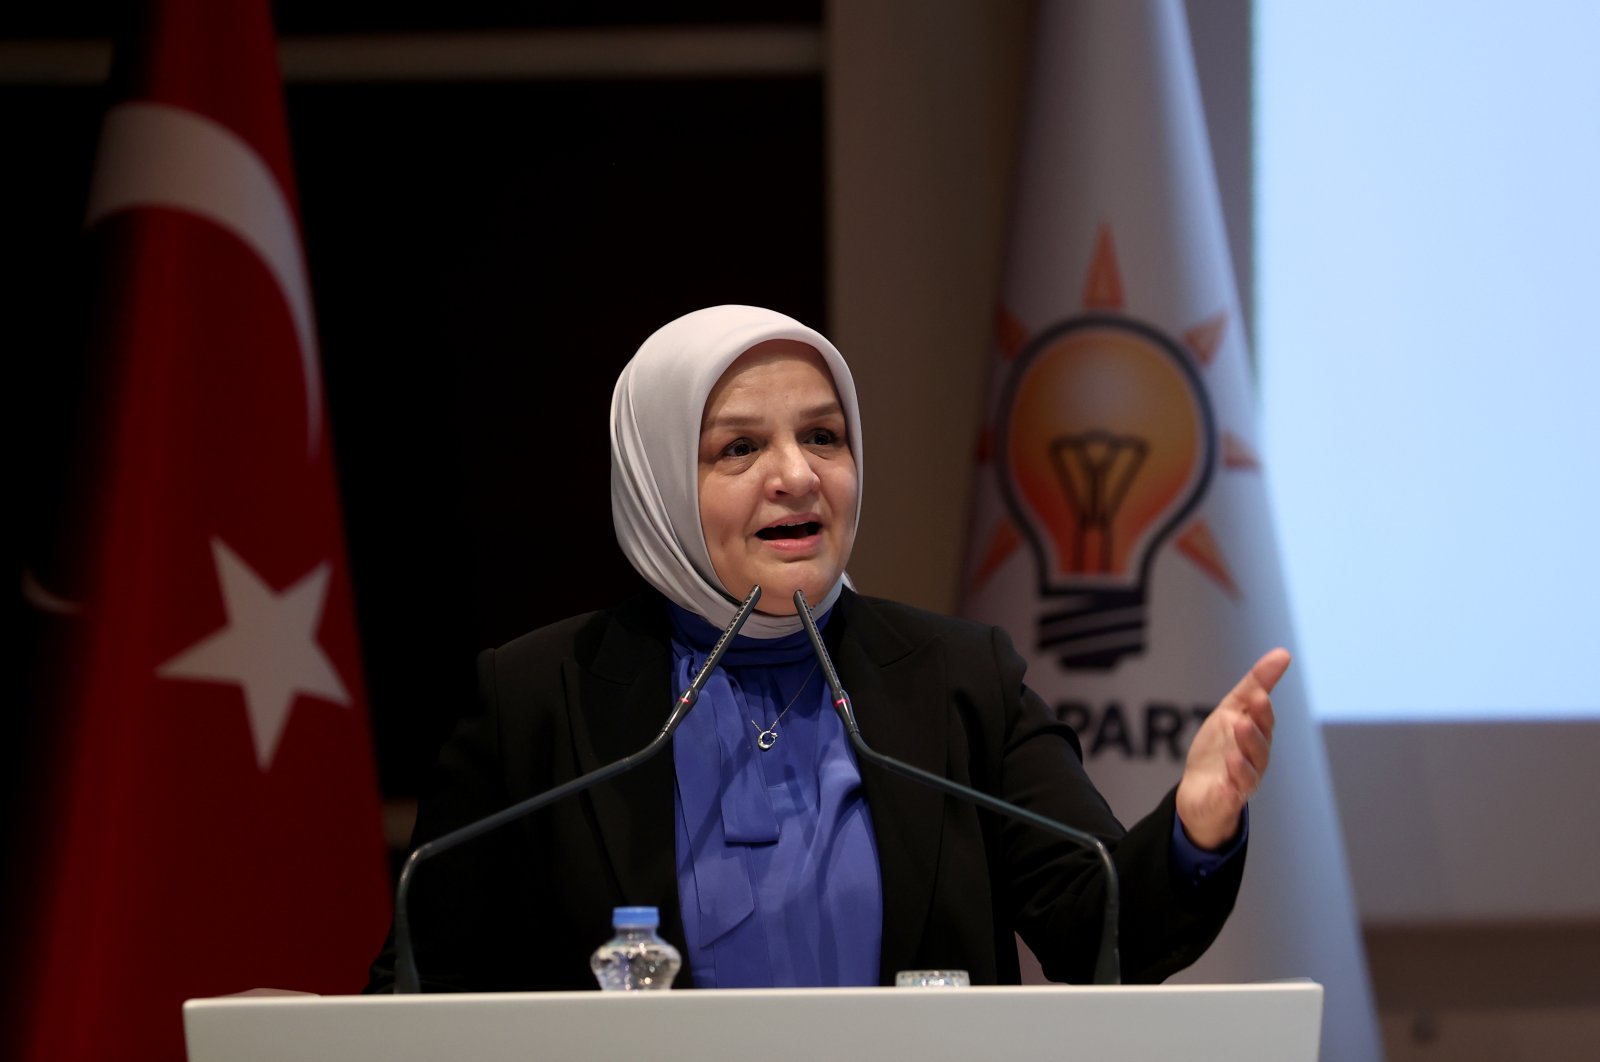 AK Party Düzce Deputy Ayşe Keşir speaks at a meeting of the ruling party in Ankara, Monday, Nov. 22, 2021. (AA Photo)